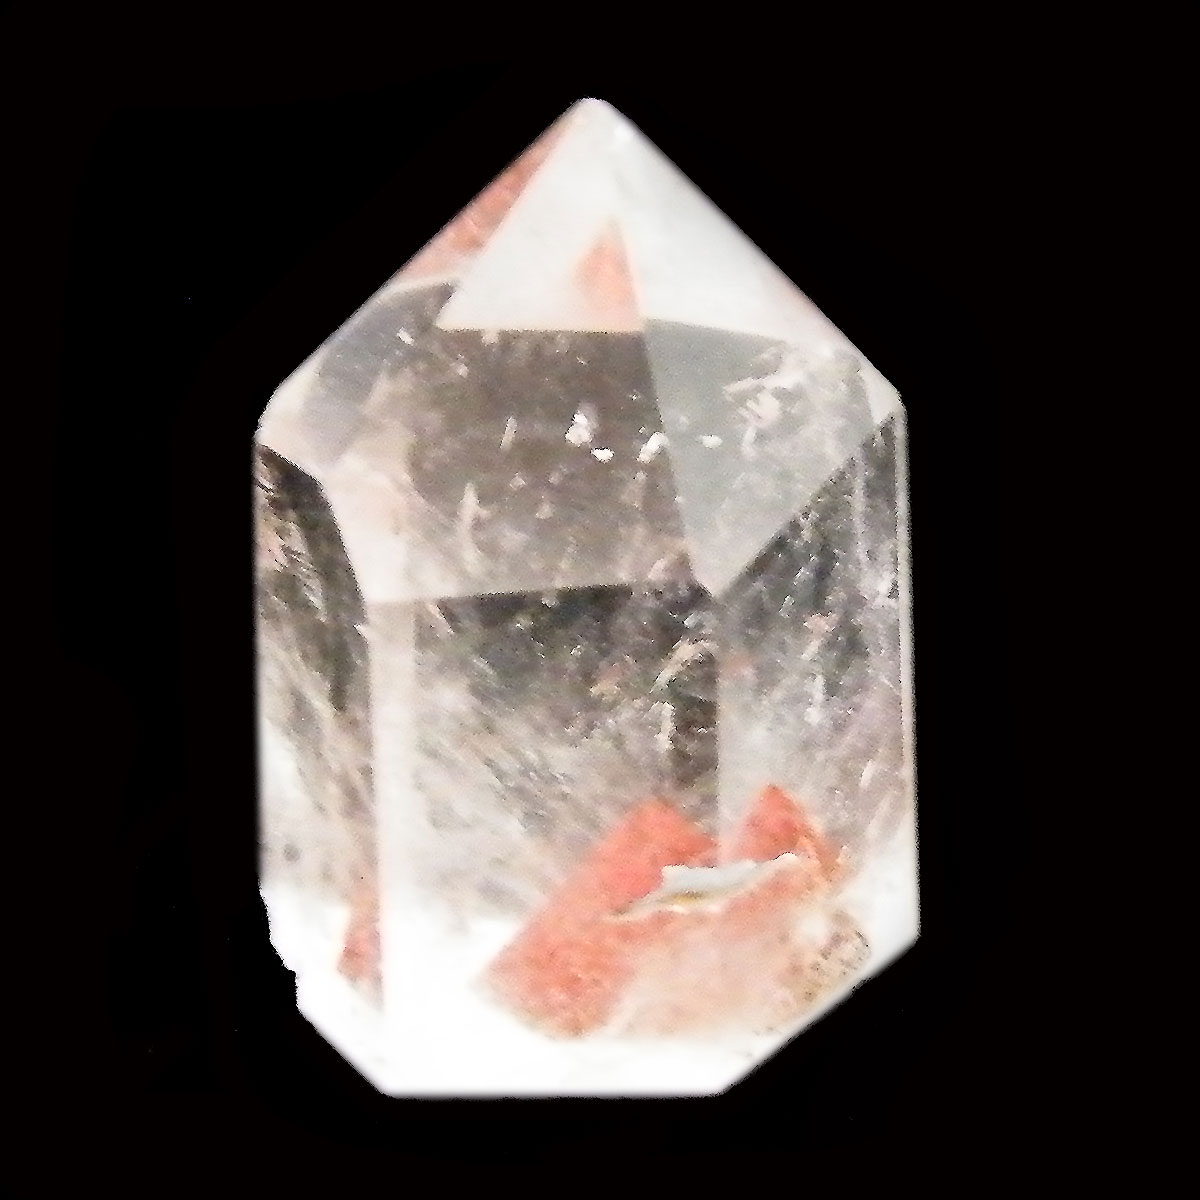  bht@gNH[c(Red phantom quartz)|Cg